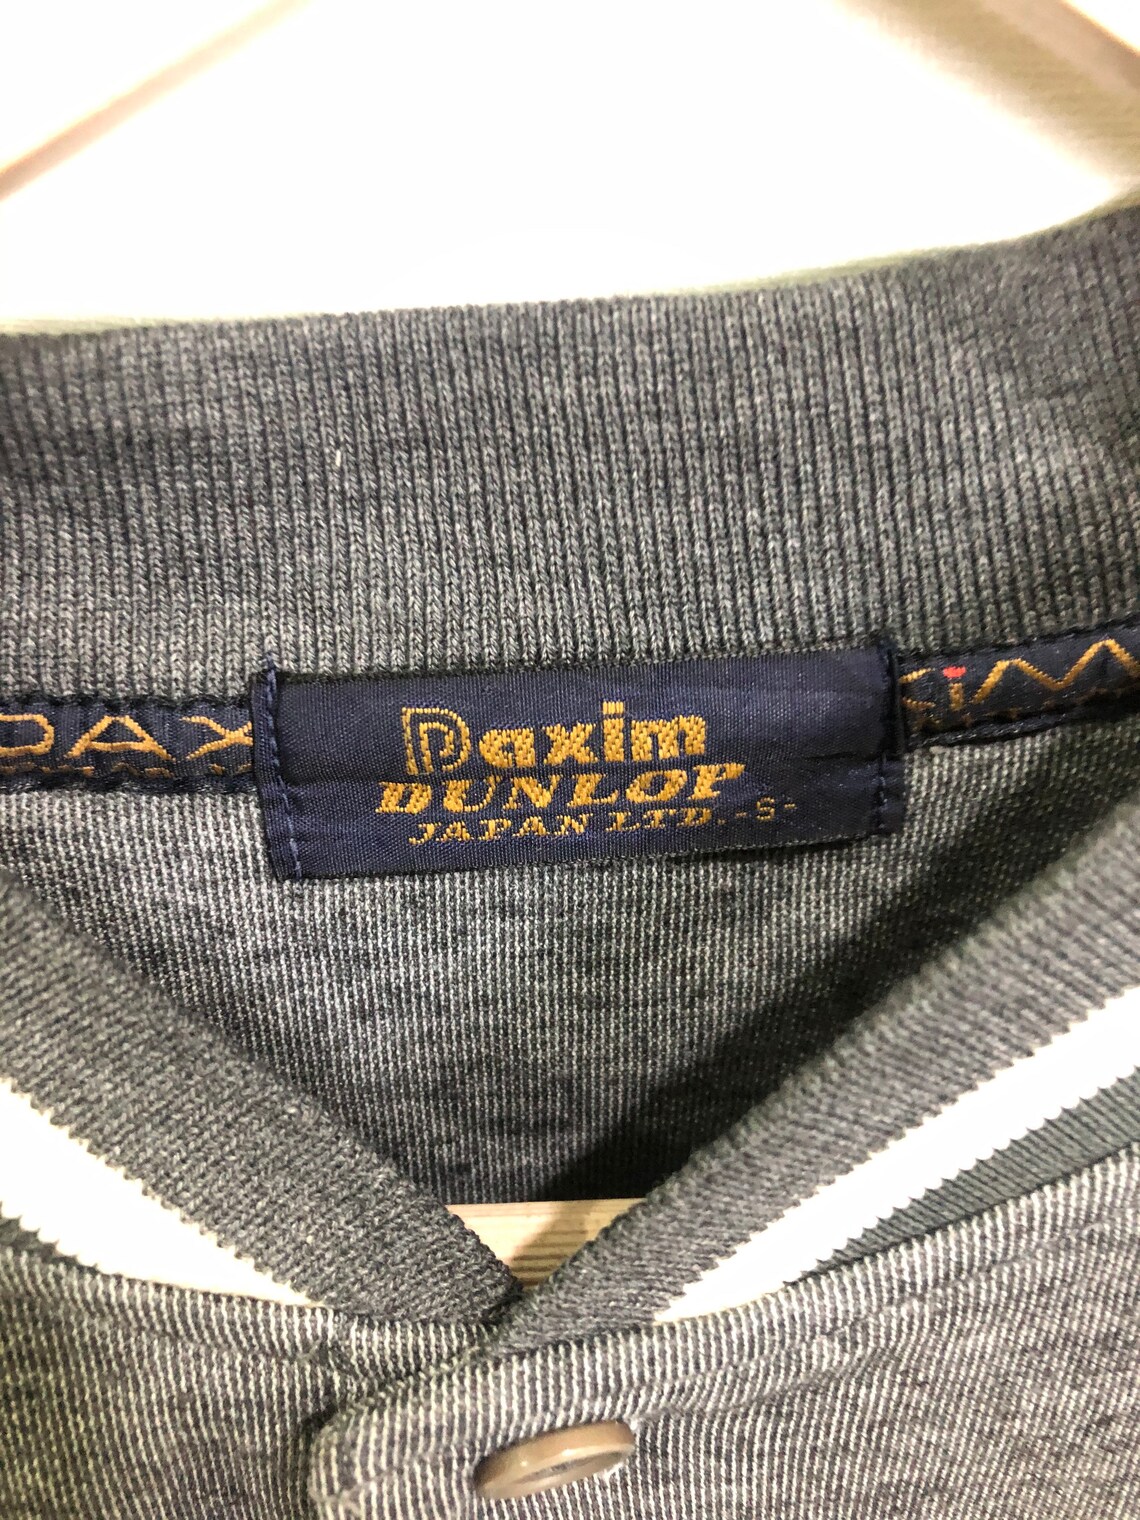 Vintage Daxim Dunlop Japan Ltd Sweatshirt Embroidery Logo | Etsy